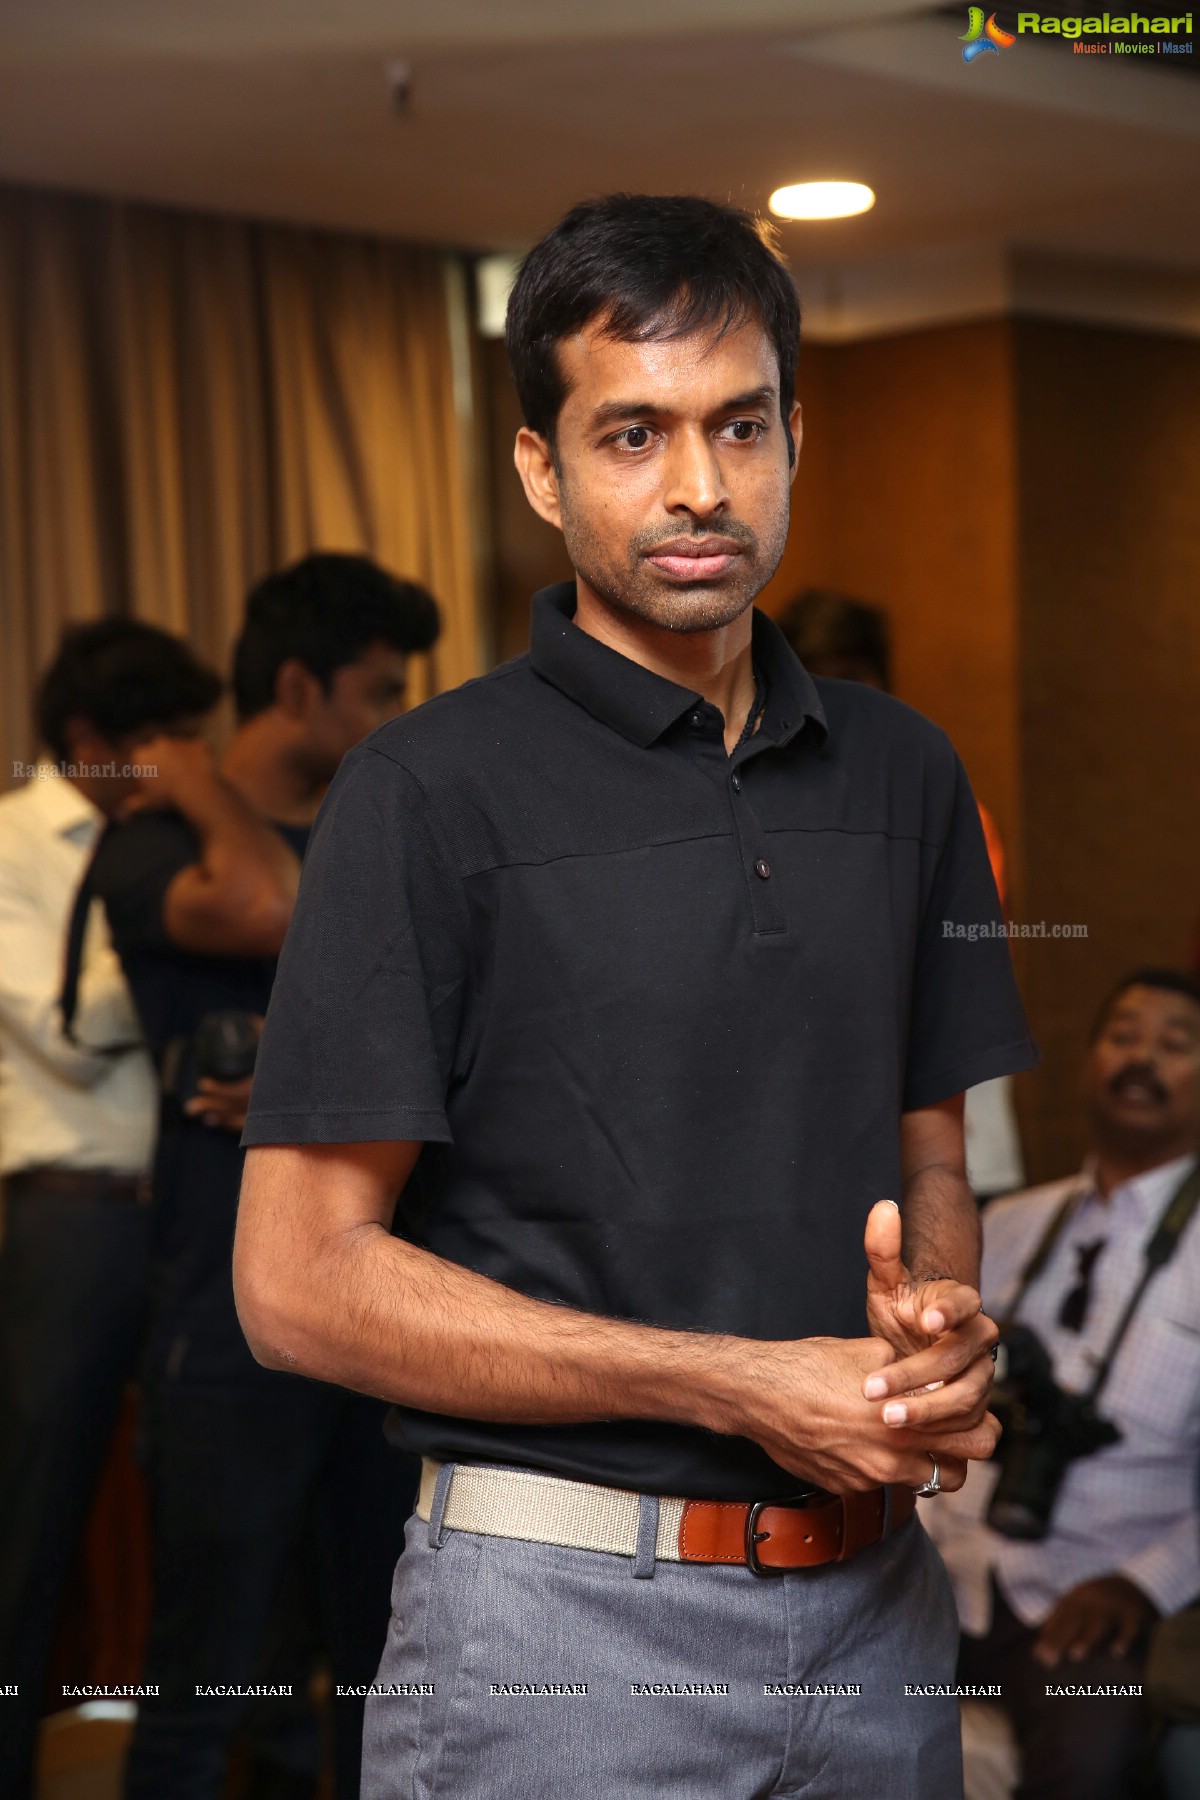 The Hyderabad 10K Run Foundation Felicitates Para-Badminton World champion Manasi Joshi